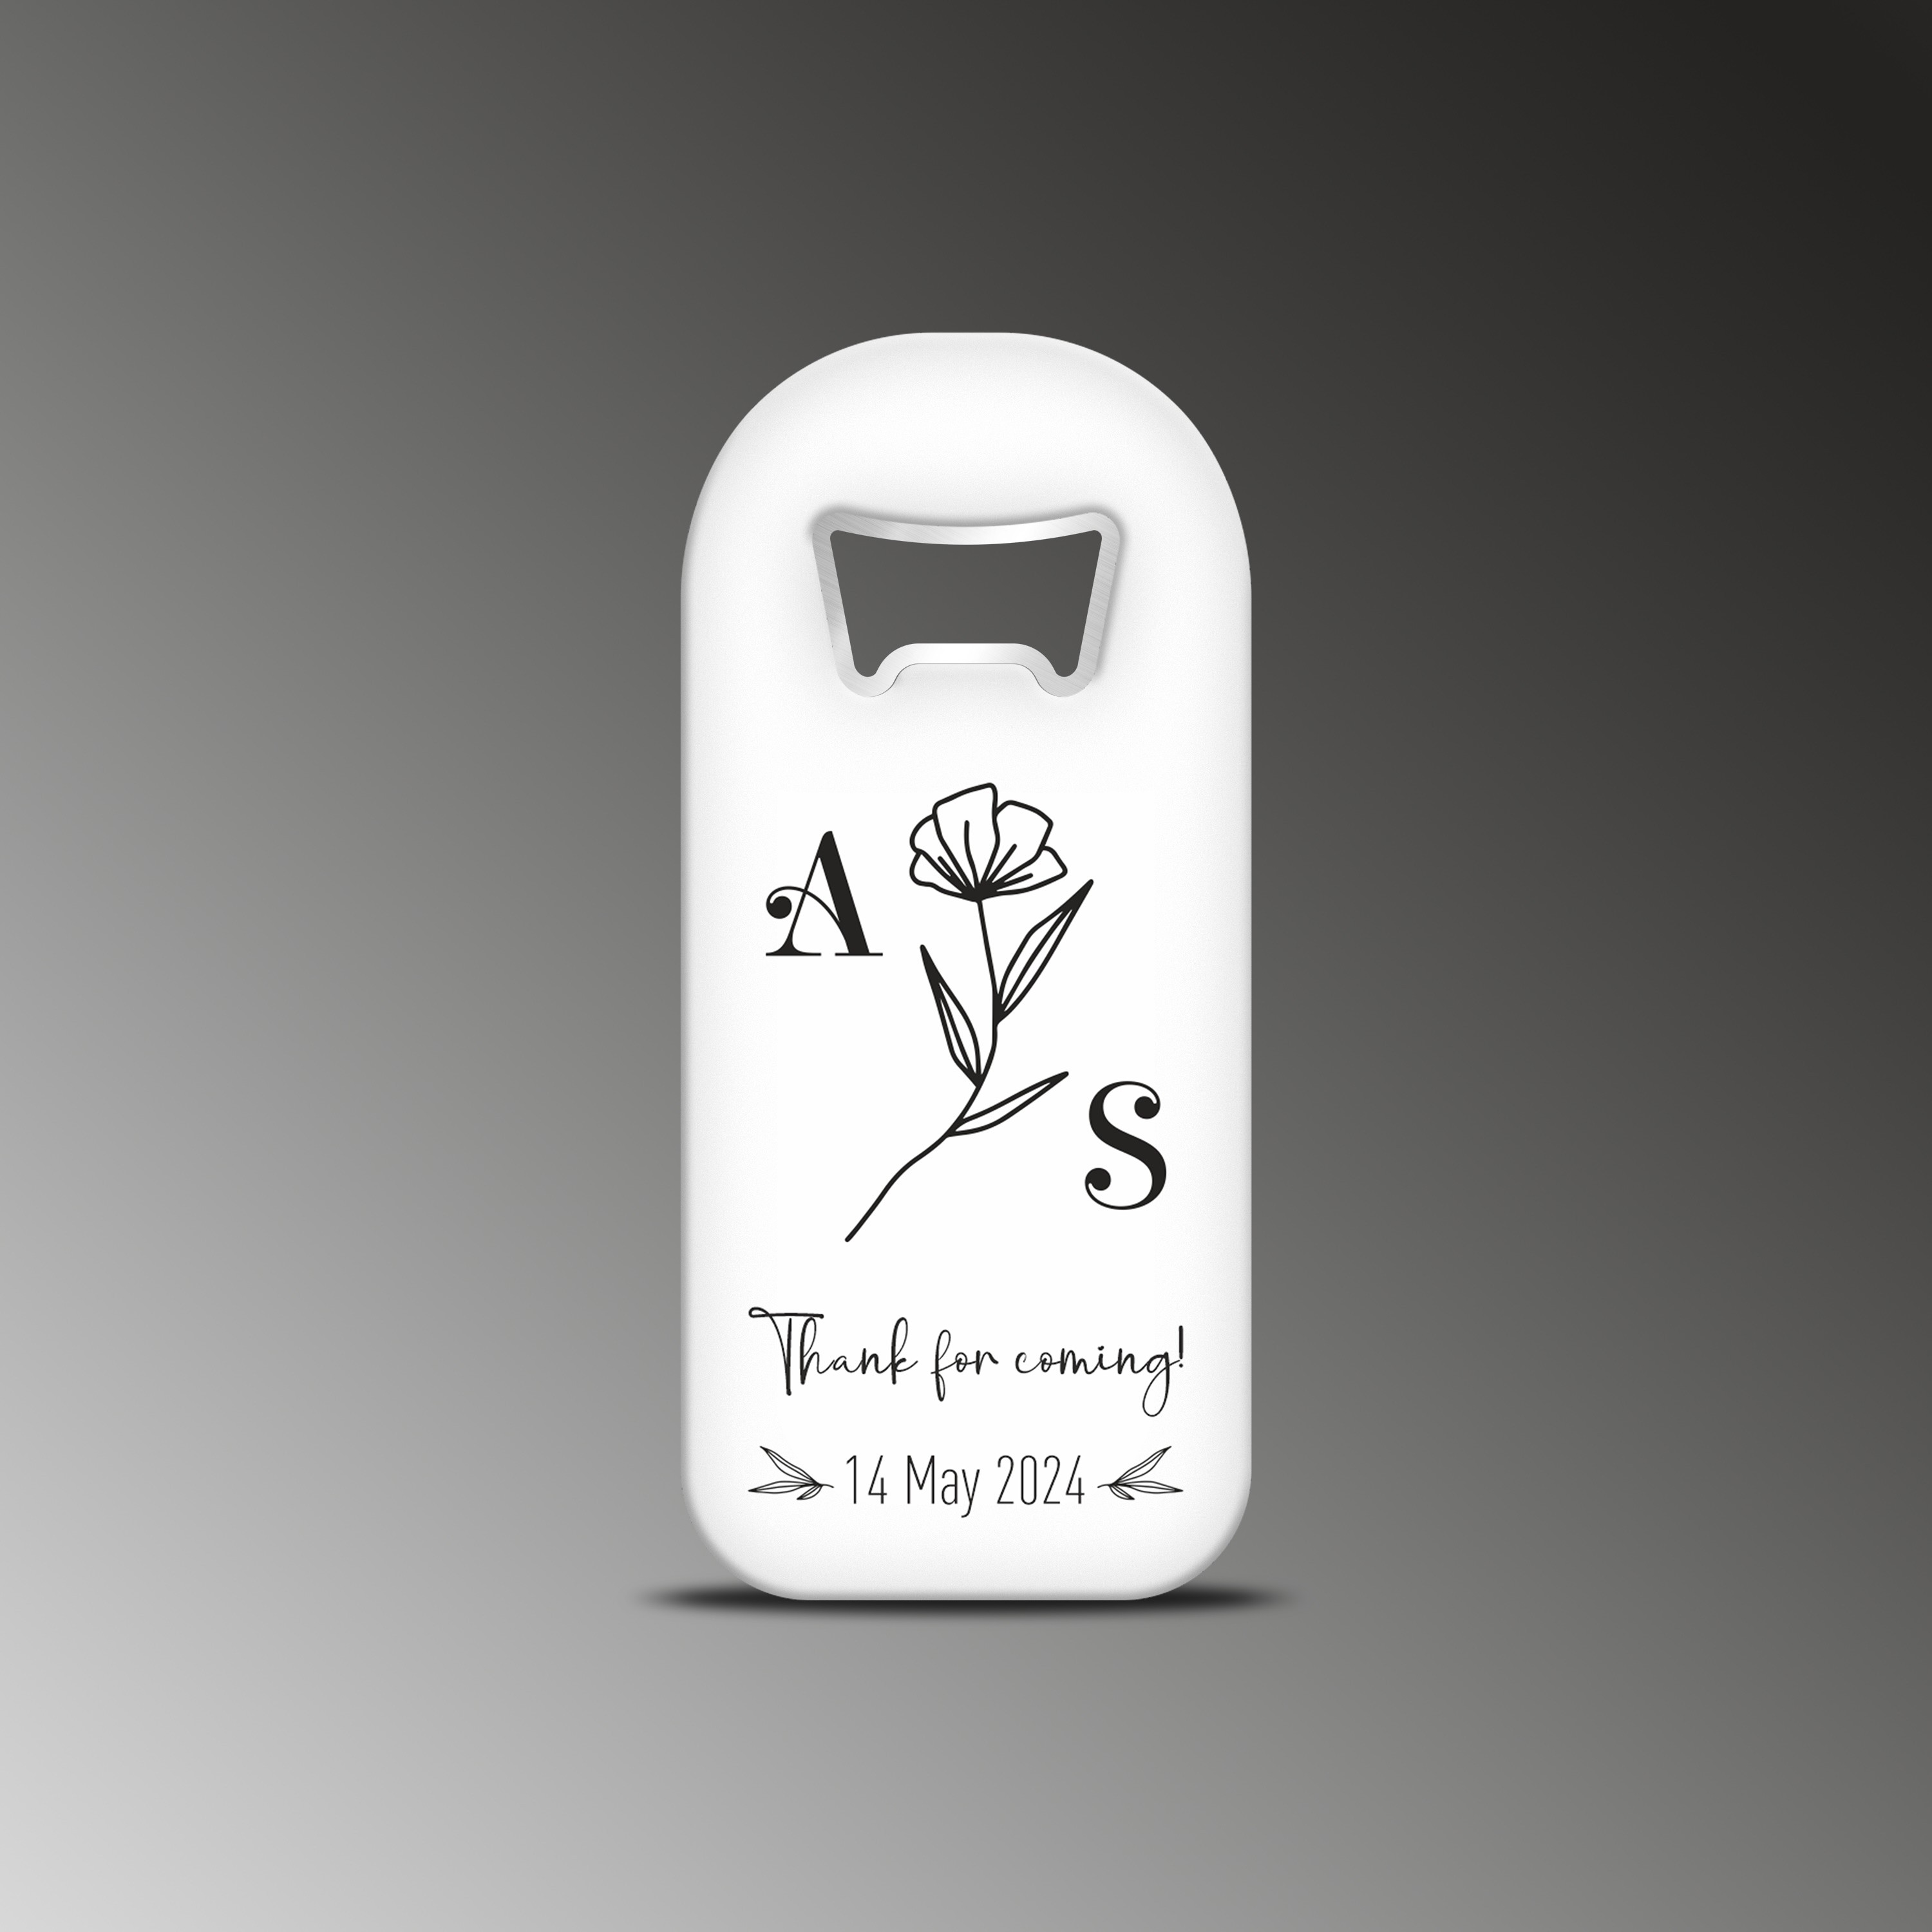 Custom Engraved Magnet Bottle Opener Wedding Favors - Personalized for Guests. Order in Bulk for a unique Wedding Souvenir